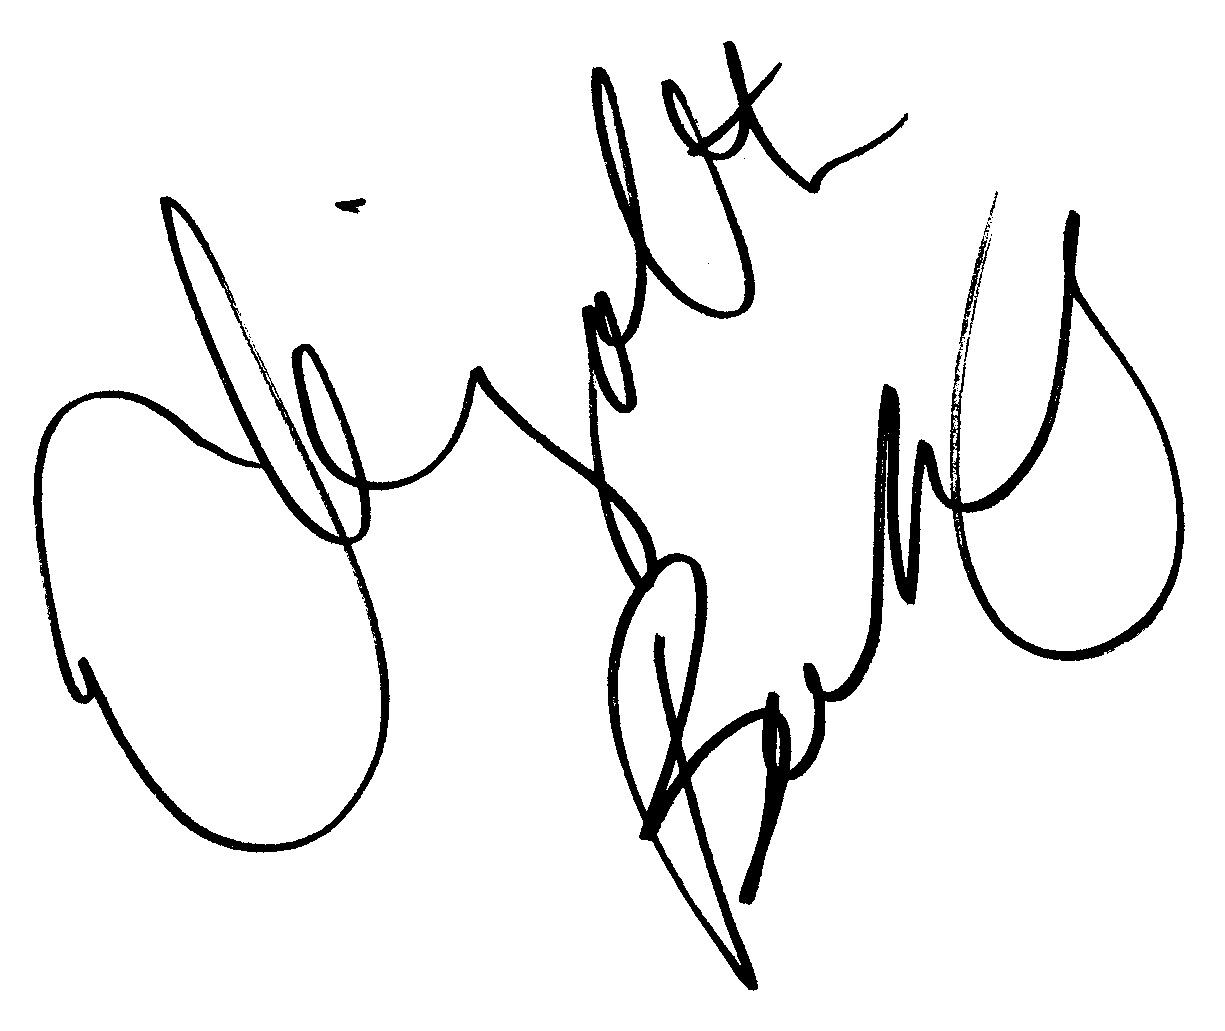 Elizabeth Berkley autograph facsimile